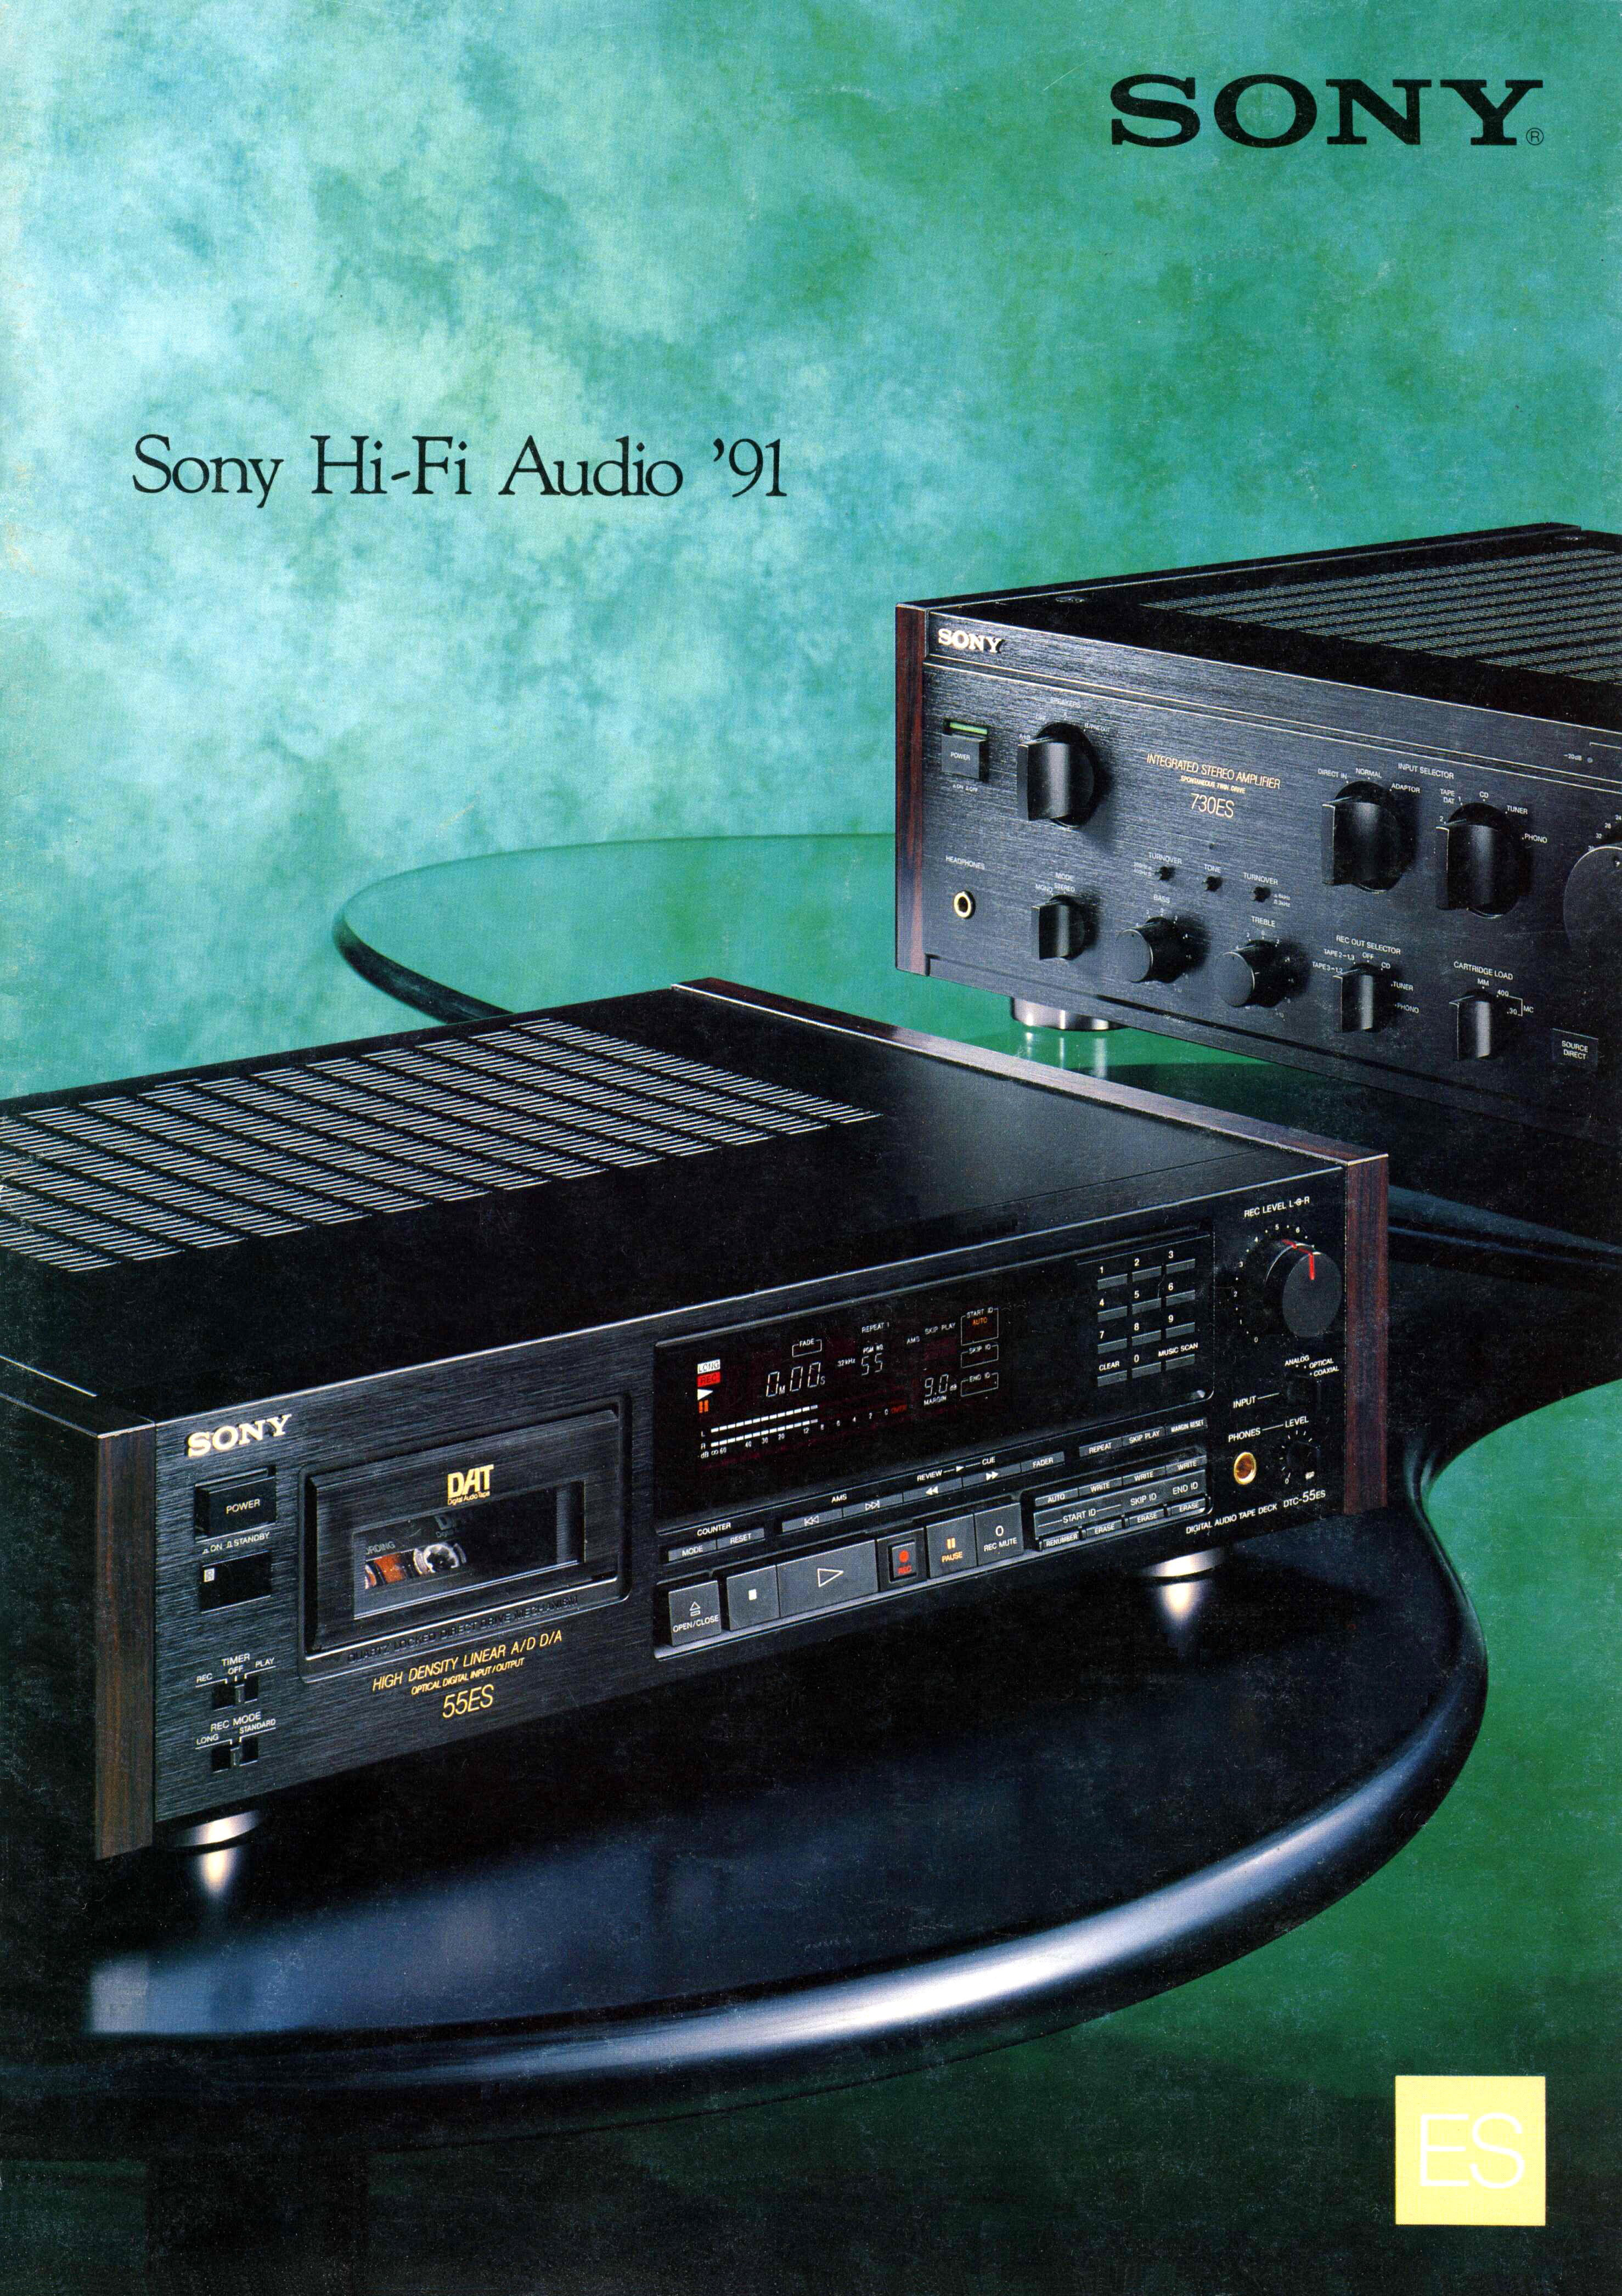 Sony DTC-55-TA-F 730 ES-Prospekt-1991.jpg